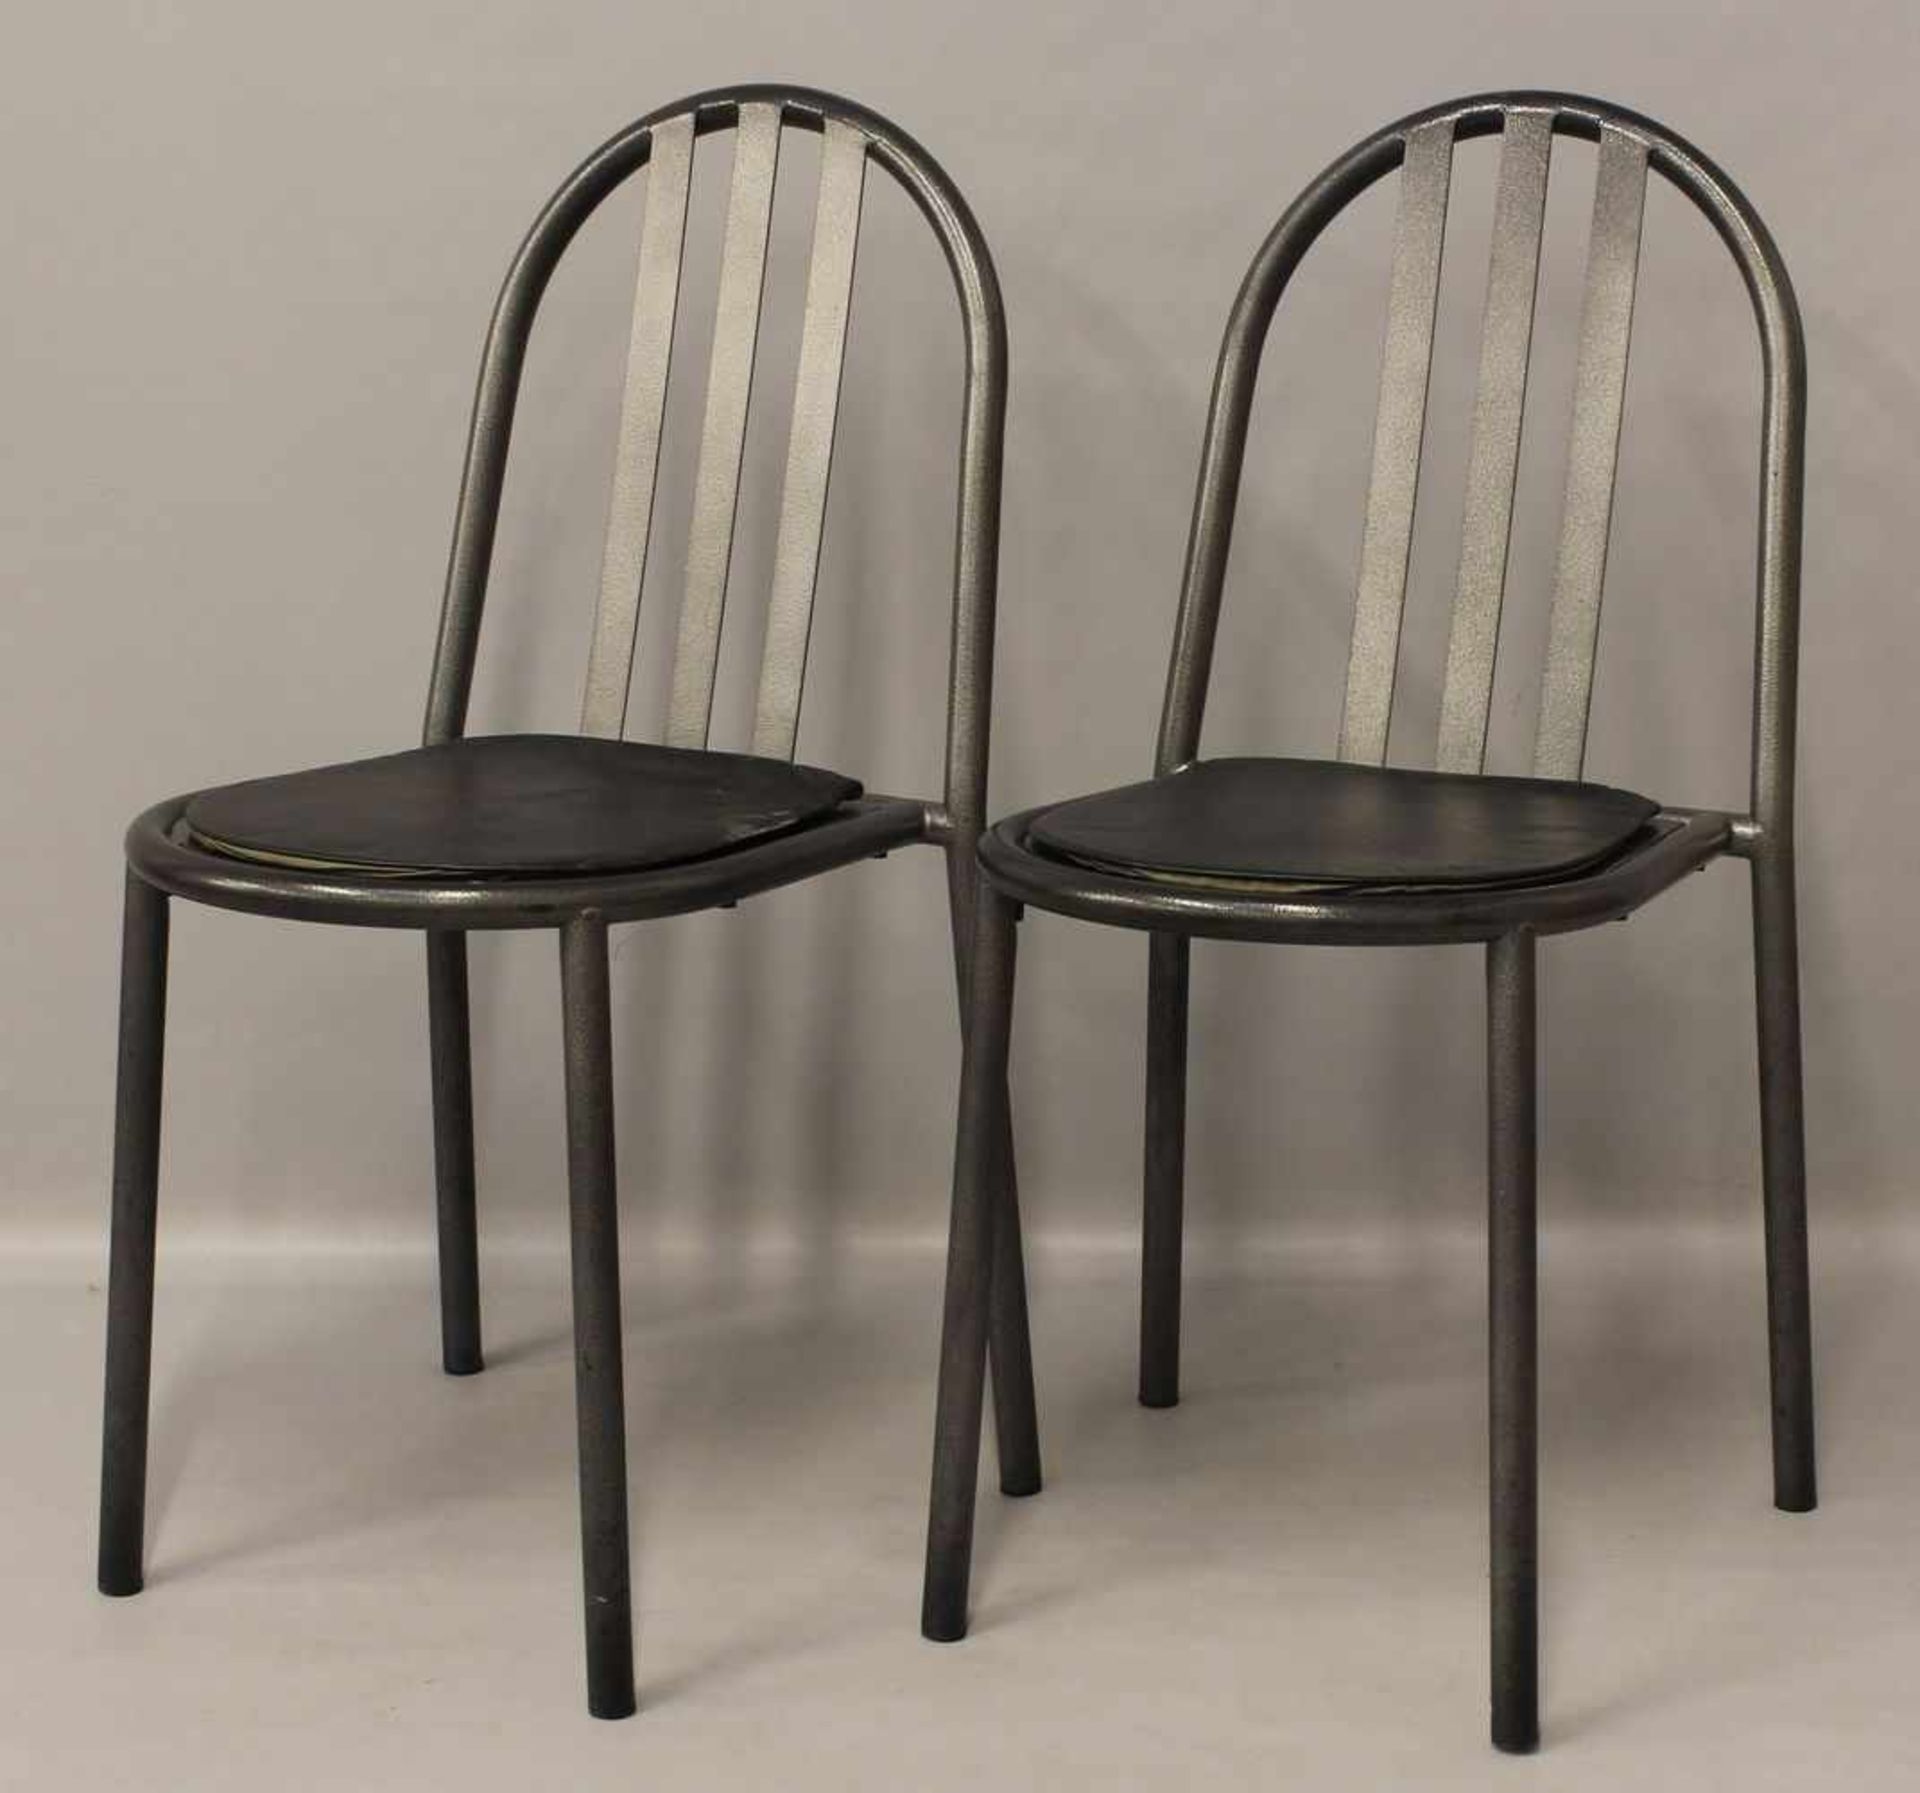 Mallet-Stevens, Robert (1886 Paris 1945)Paar Stühle "La petite chaise noir". Metall, silber-